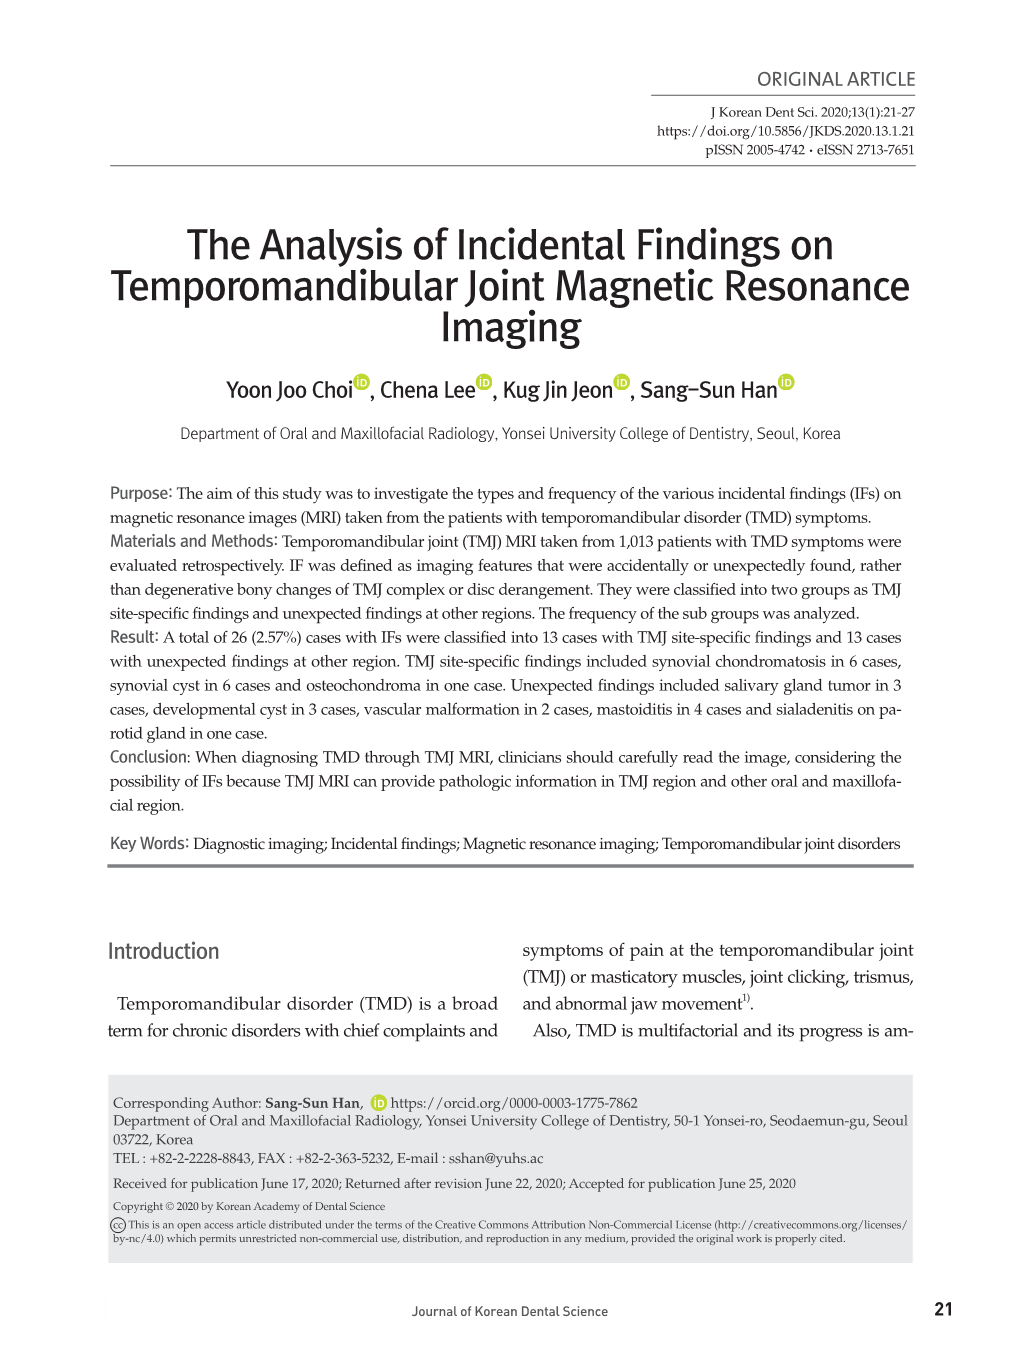 The Analysis of Incidental Findings on Temporomandibular Joint Magnetic Resonance Imaging